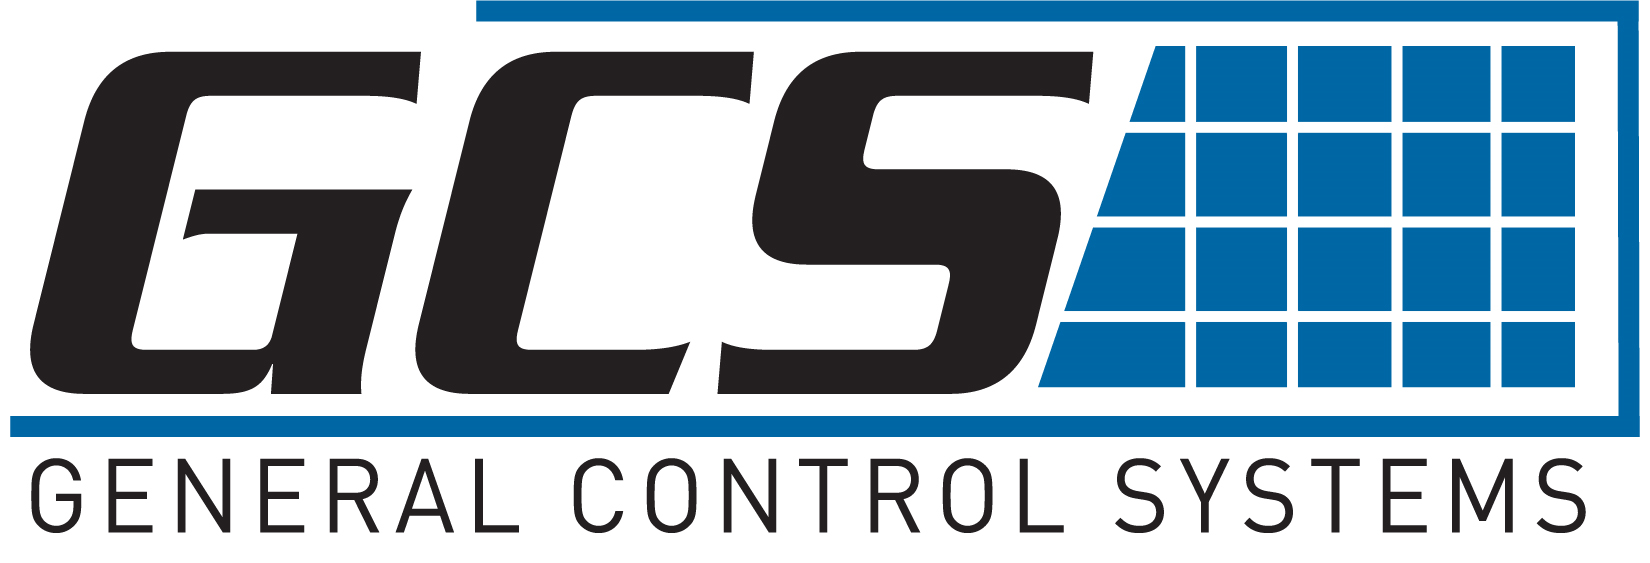 General Control Systems Inc. logo